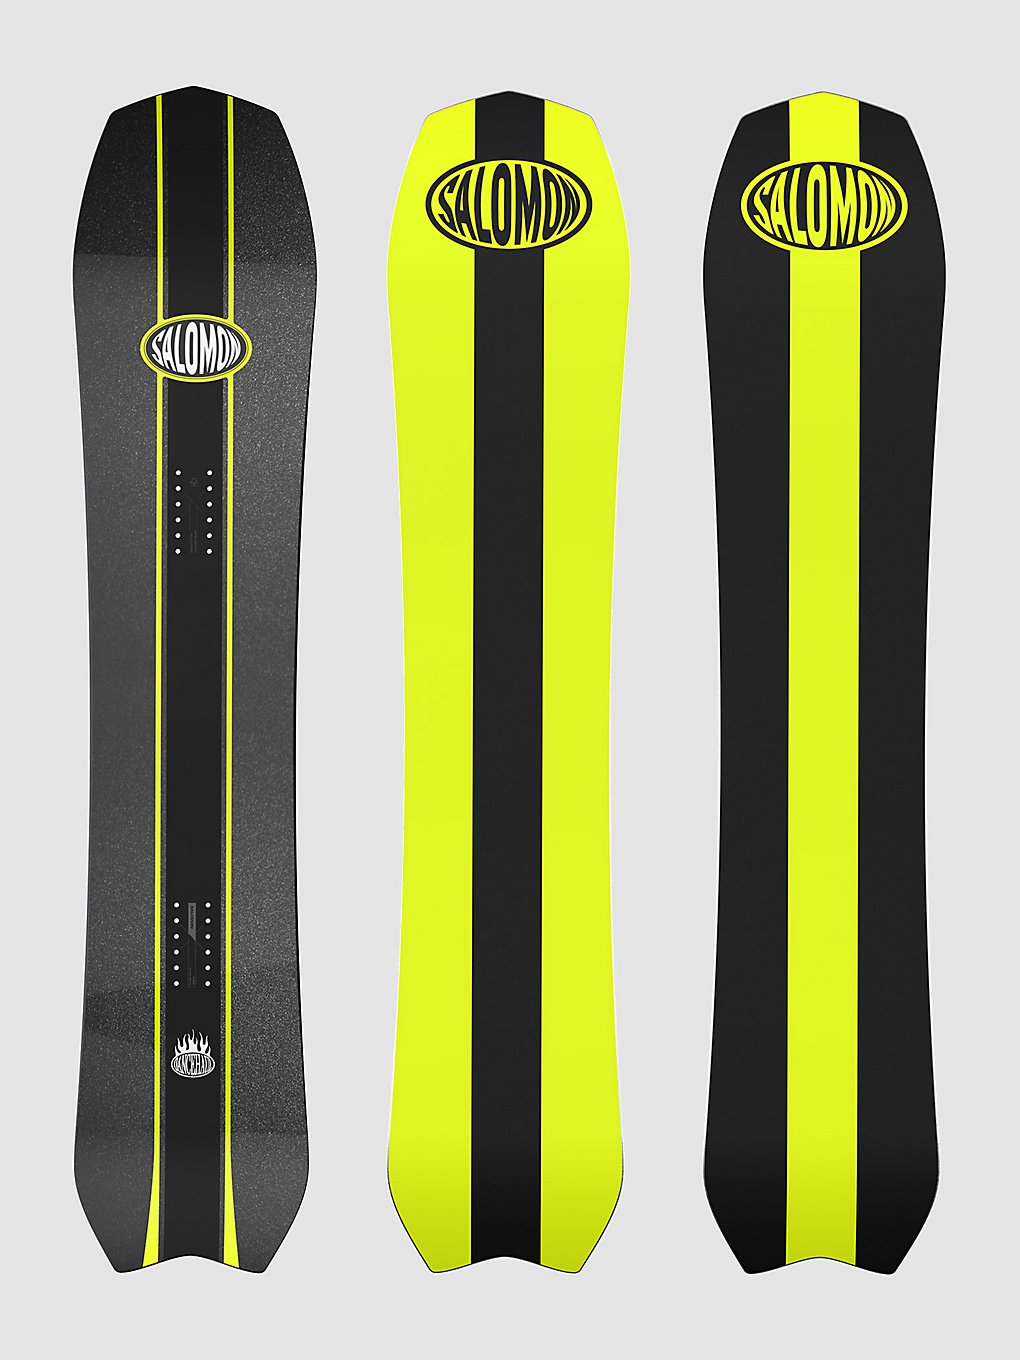 Salomon Dancehaul 152 2023 Snowboard multi color kaufen